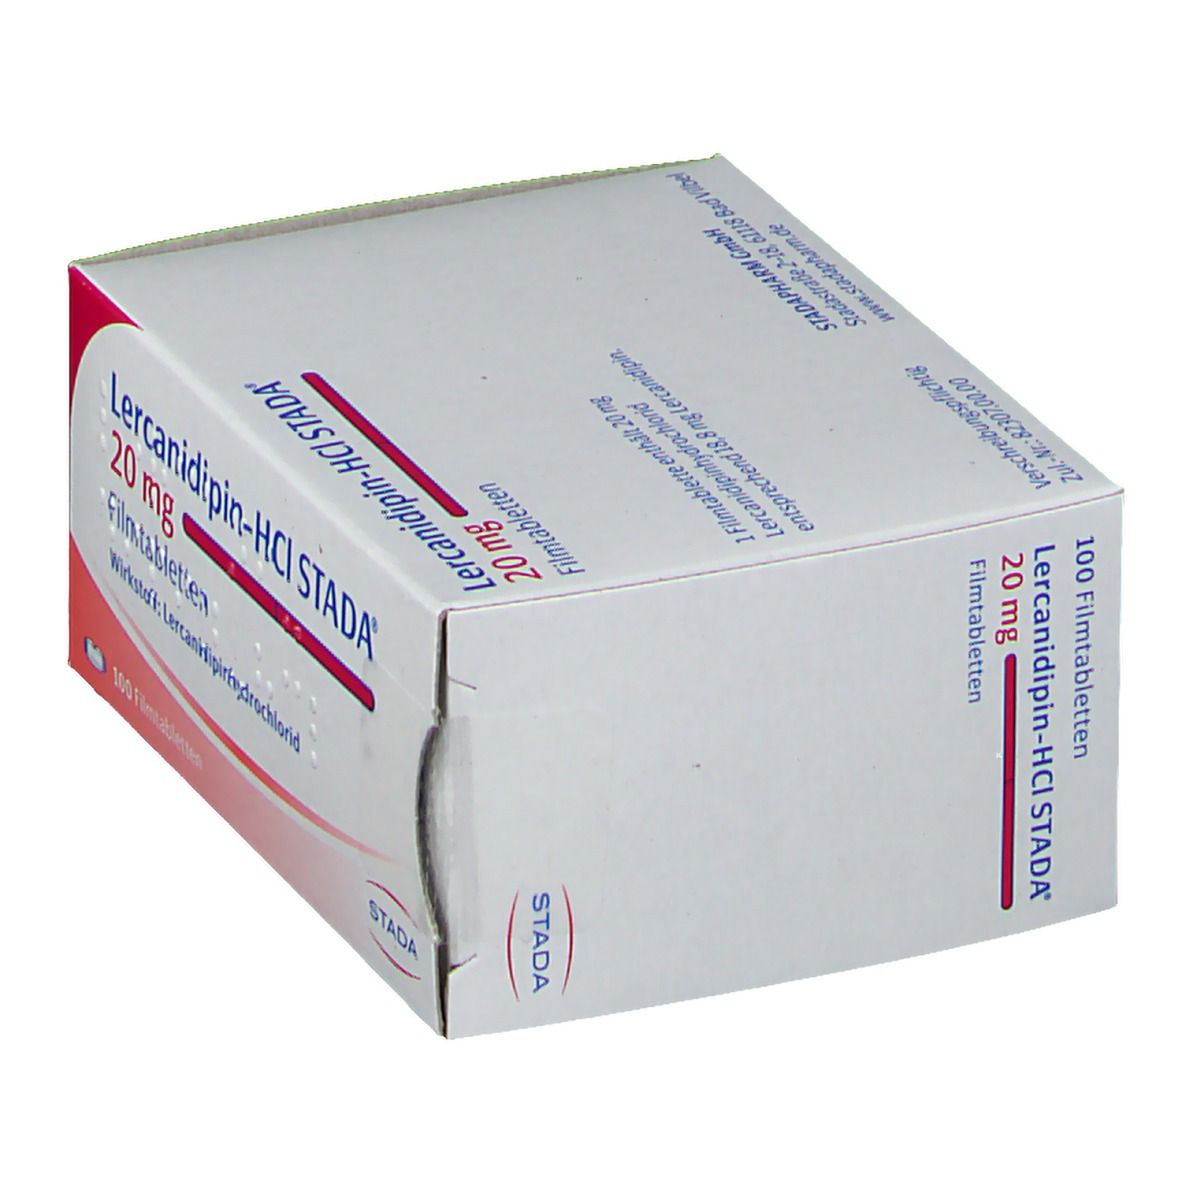 Lercanidipin-HCL STADA® 20 mg